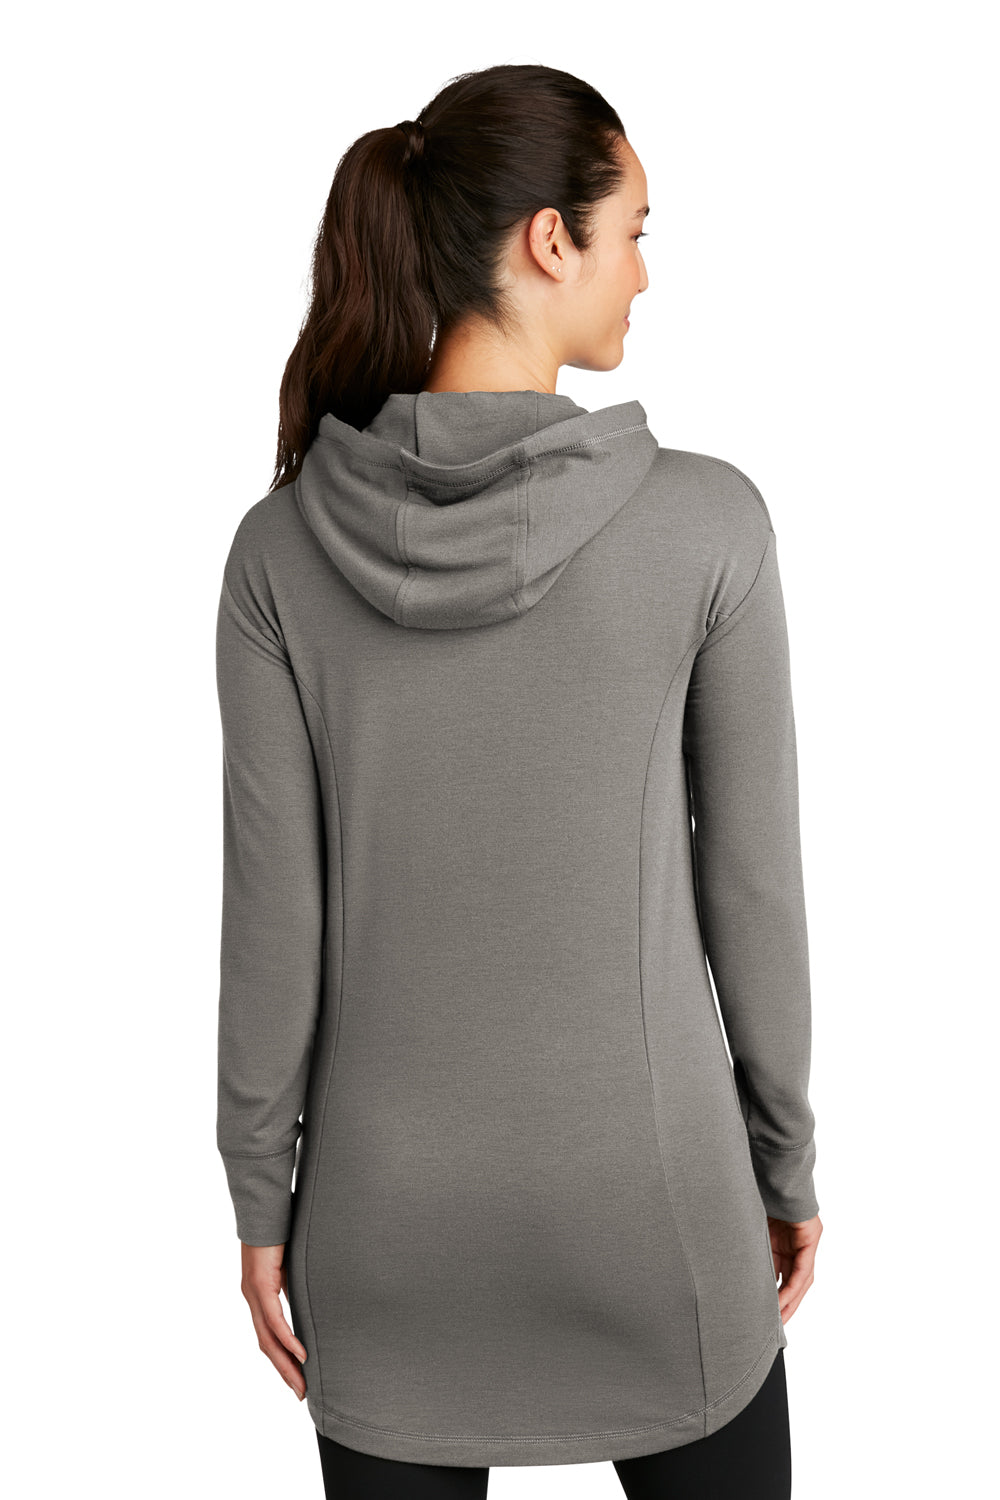 Ogio LOG827 Womens Luuma Flex Long Sleeve Hooded Sweatshirt Hoodie Heather Petrol Grey Back